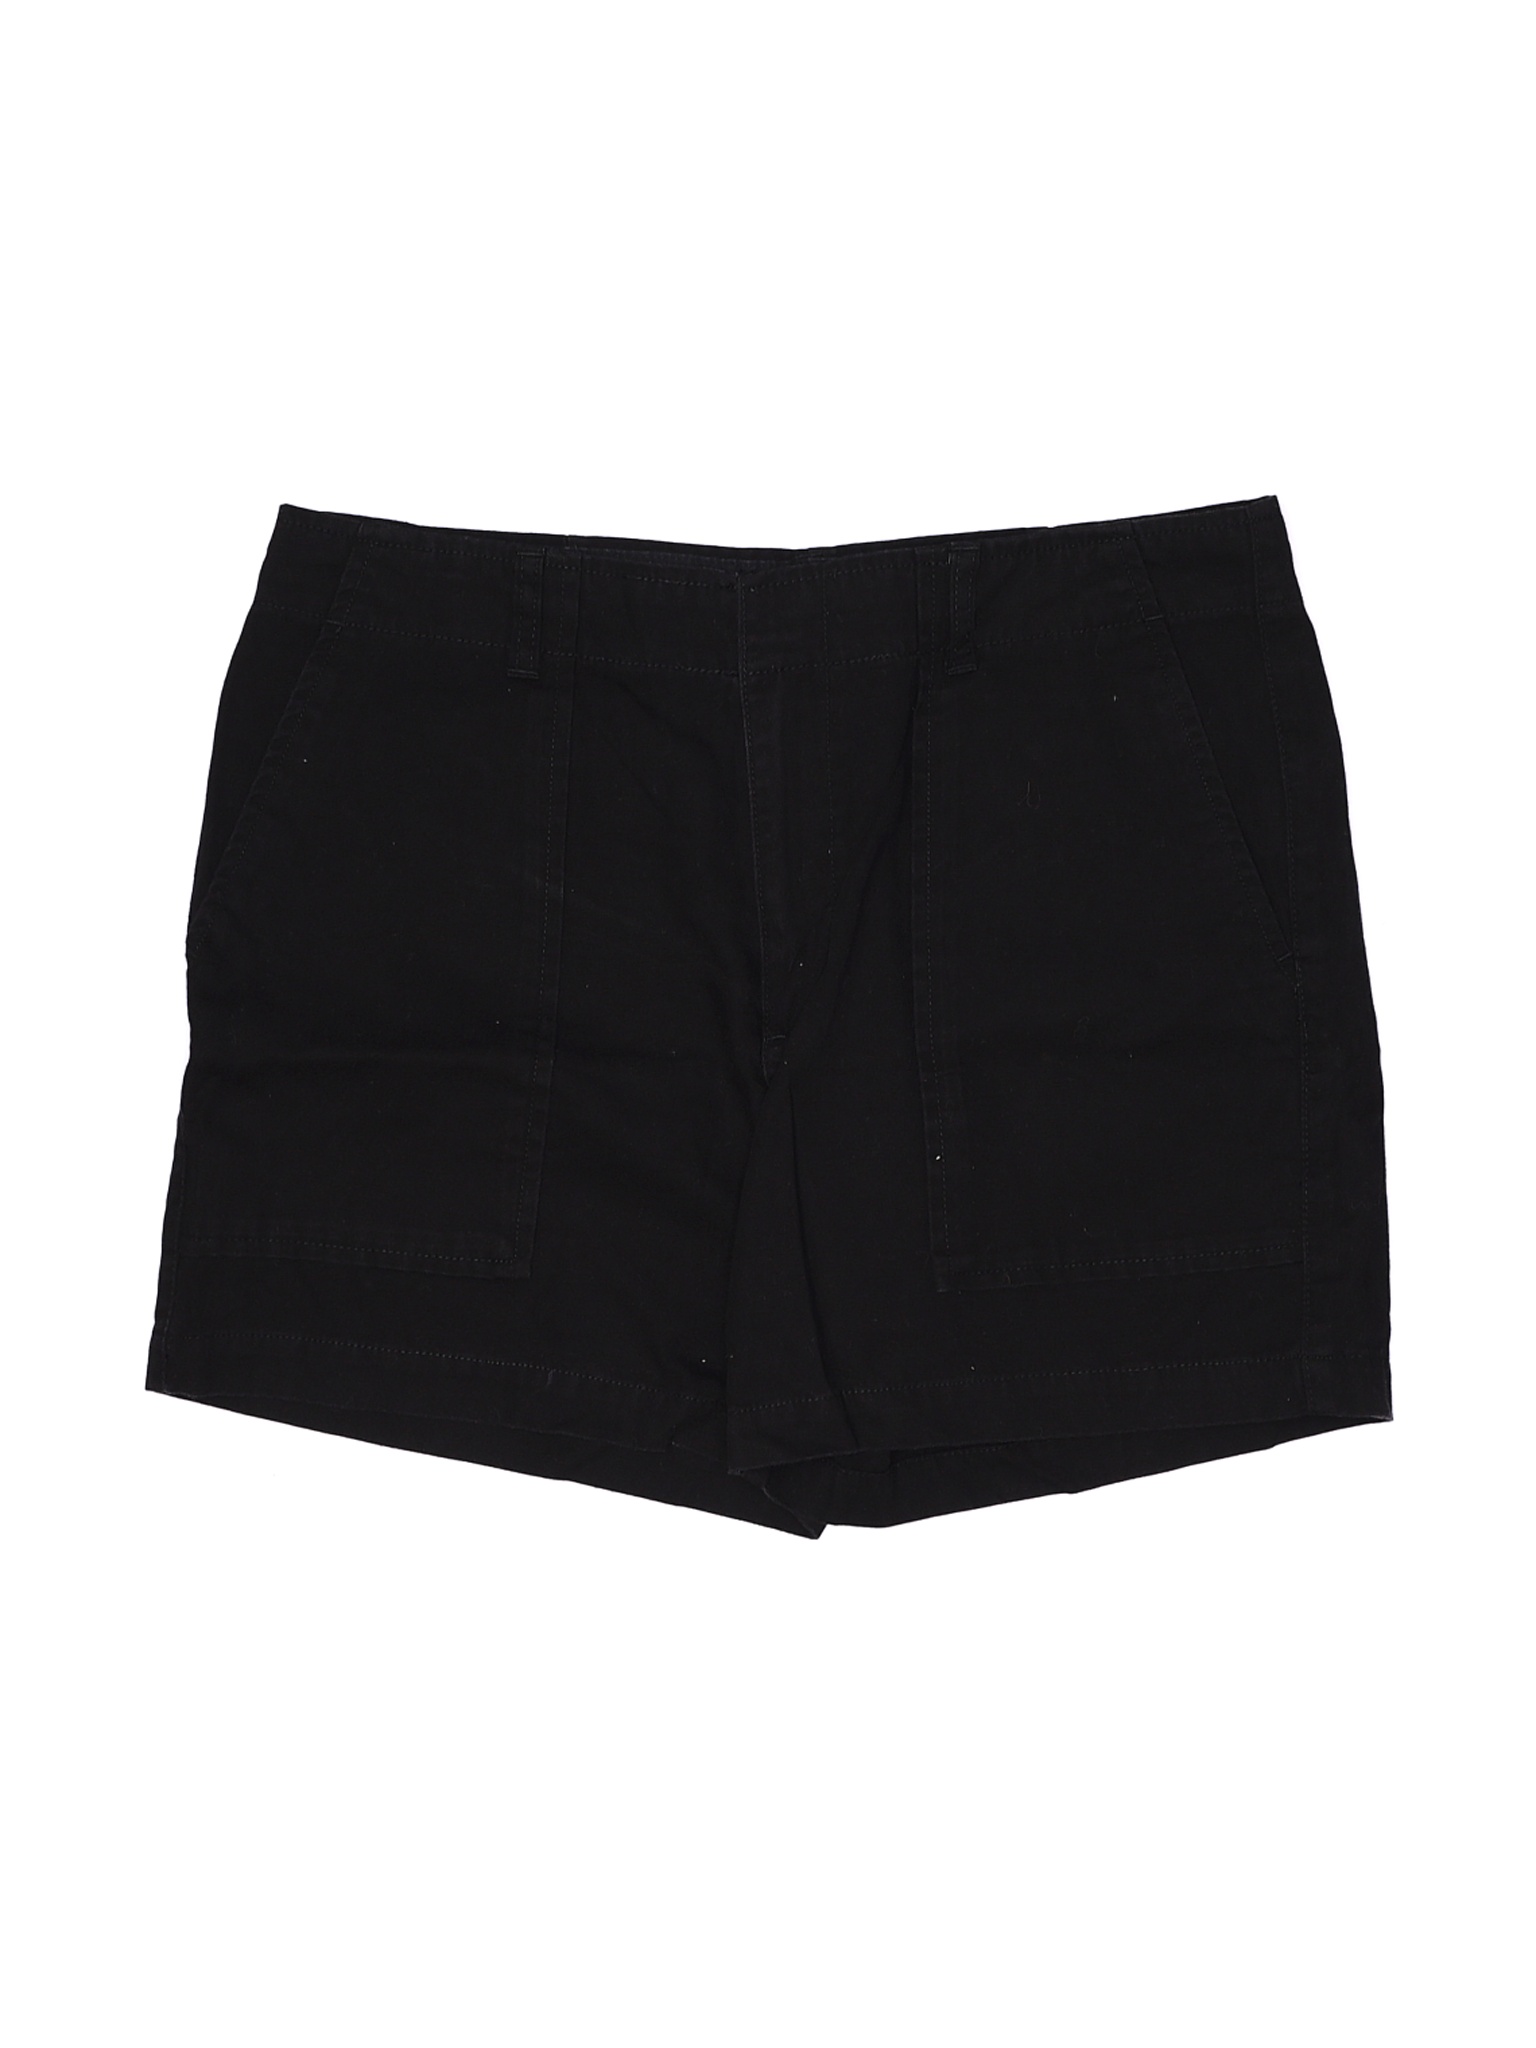 CALVIN KLEIN JEANS Women Black Shorts 12 | eBay